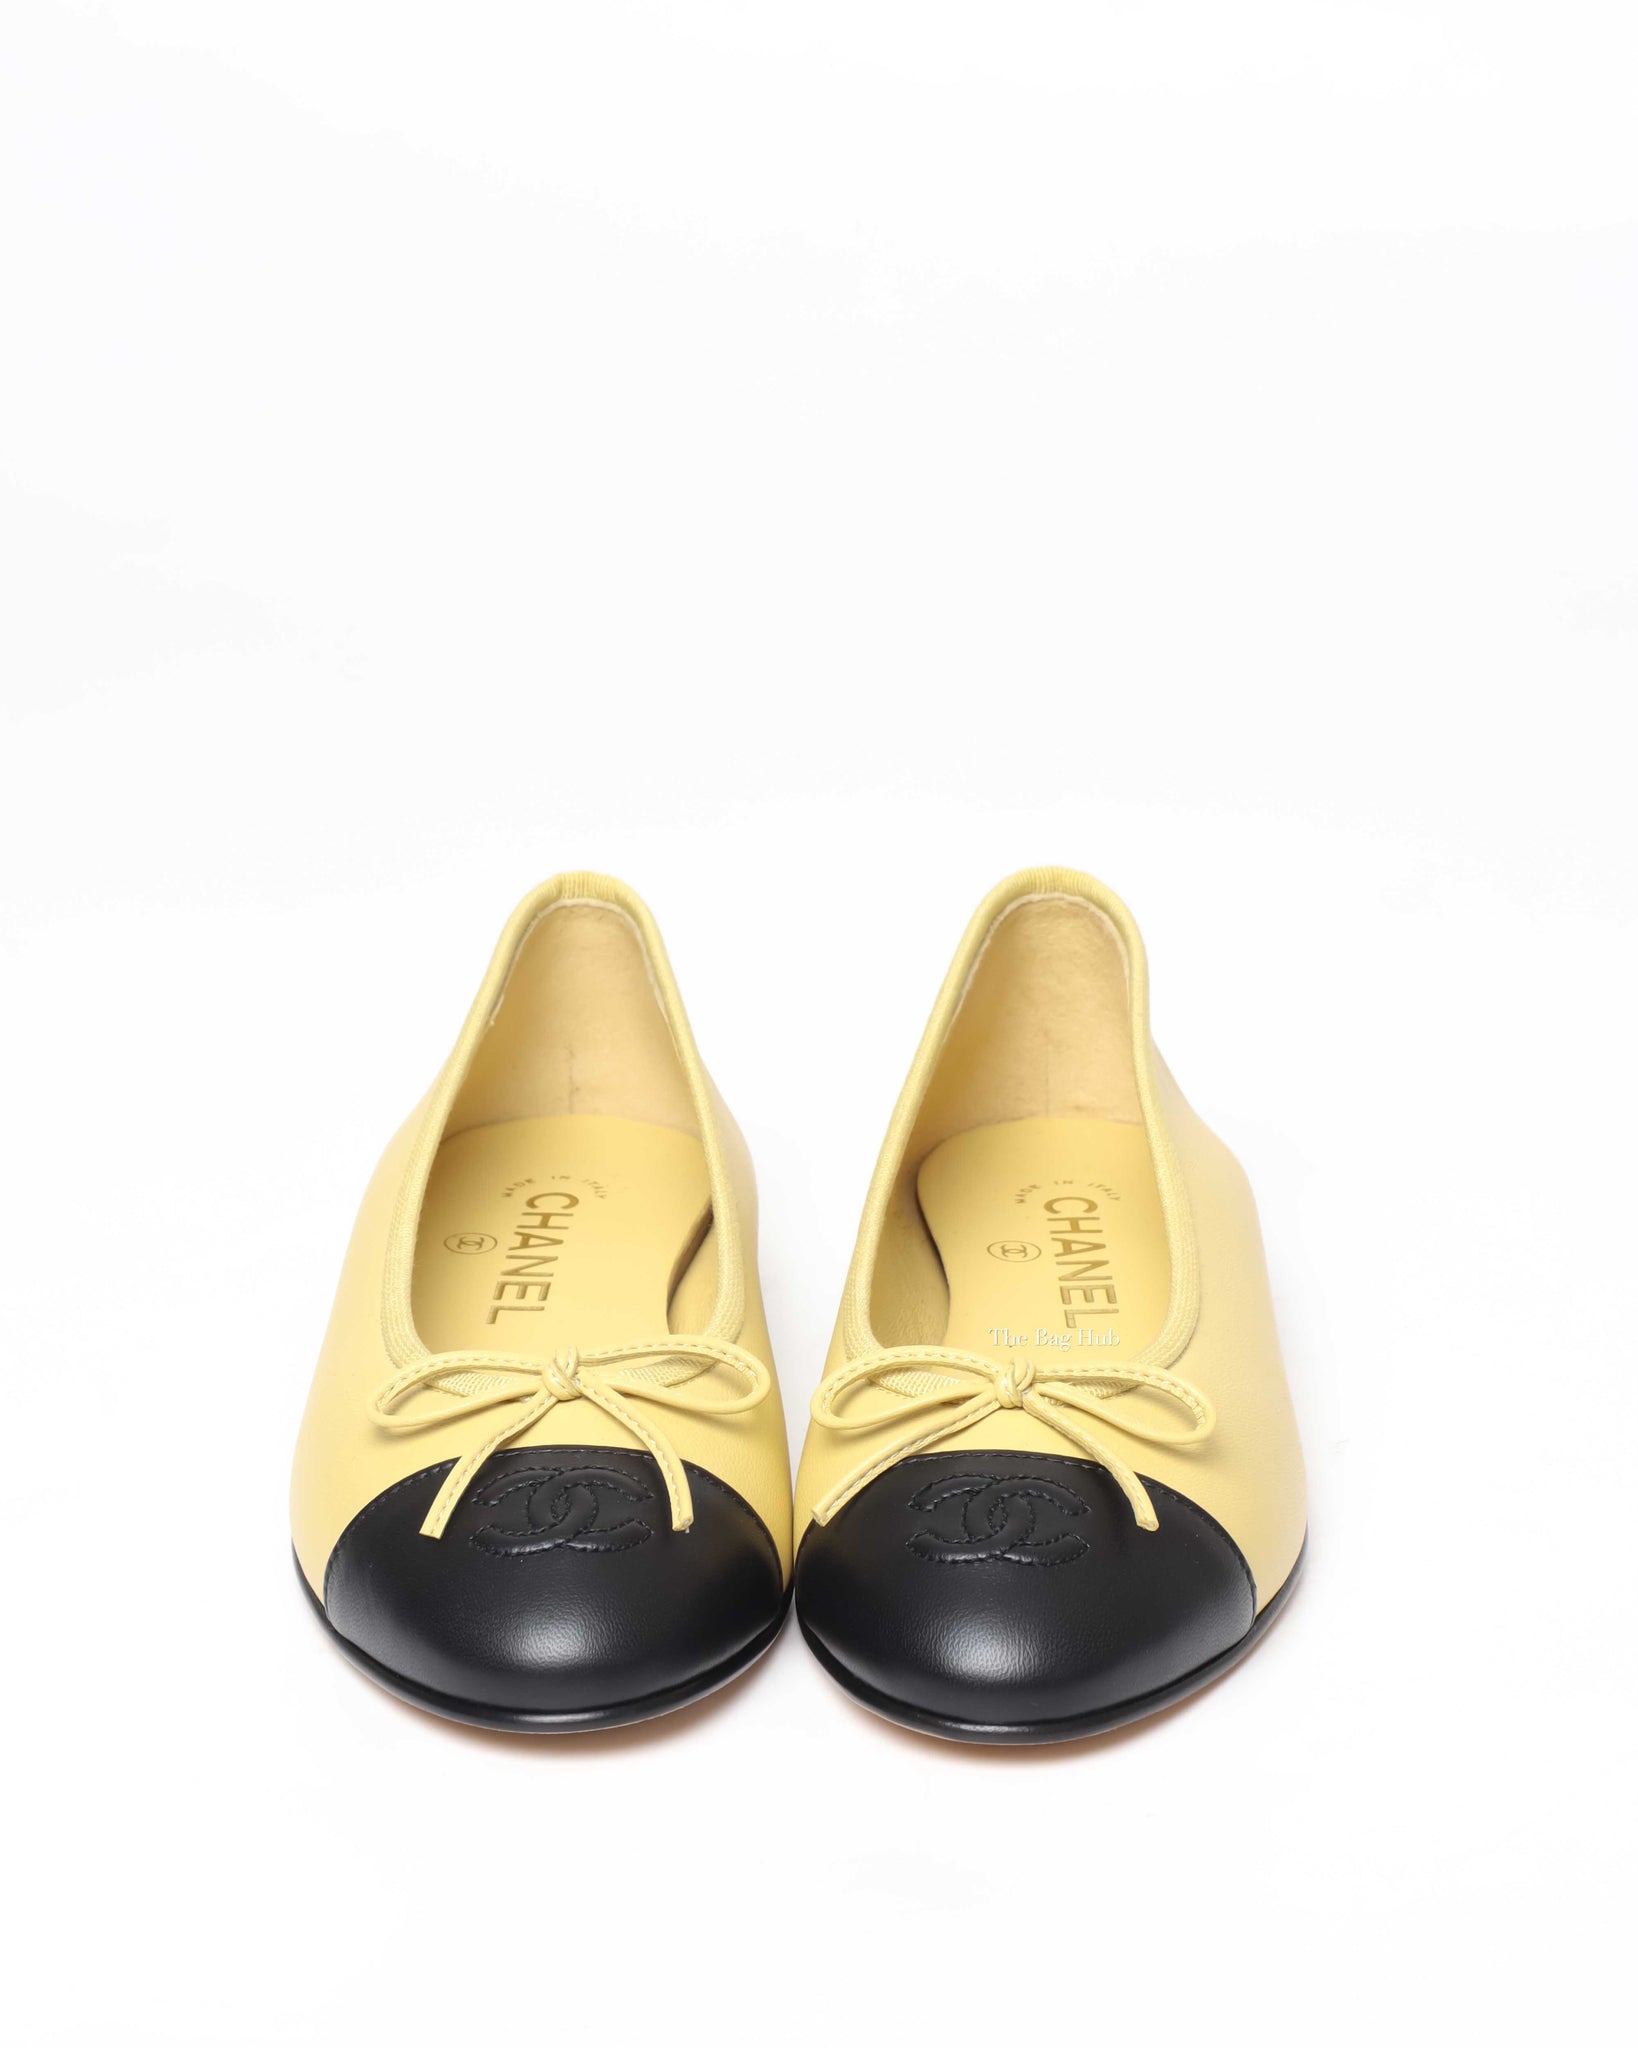 Chanel Yellow/Black Ballet Flats Size 37C-3